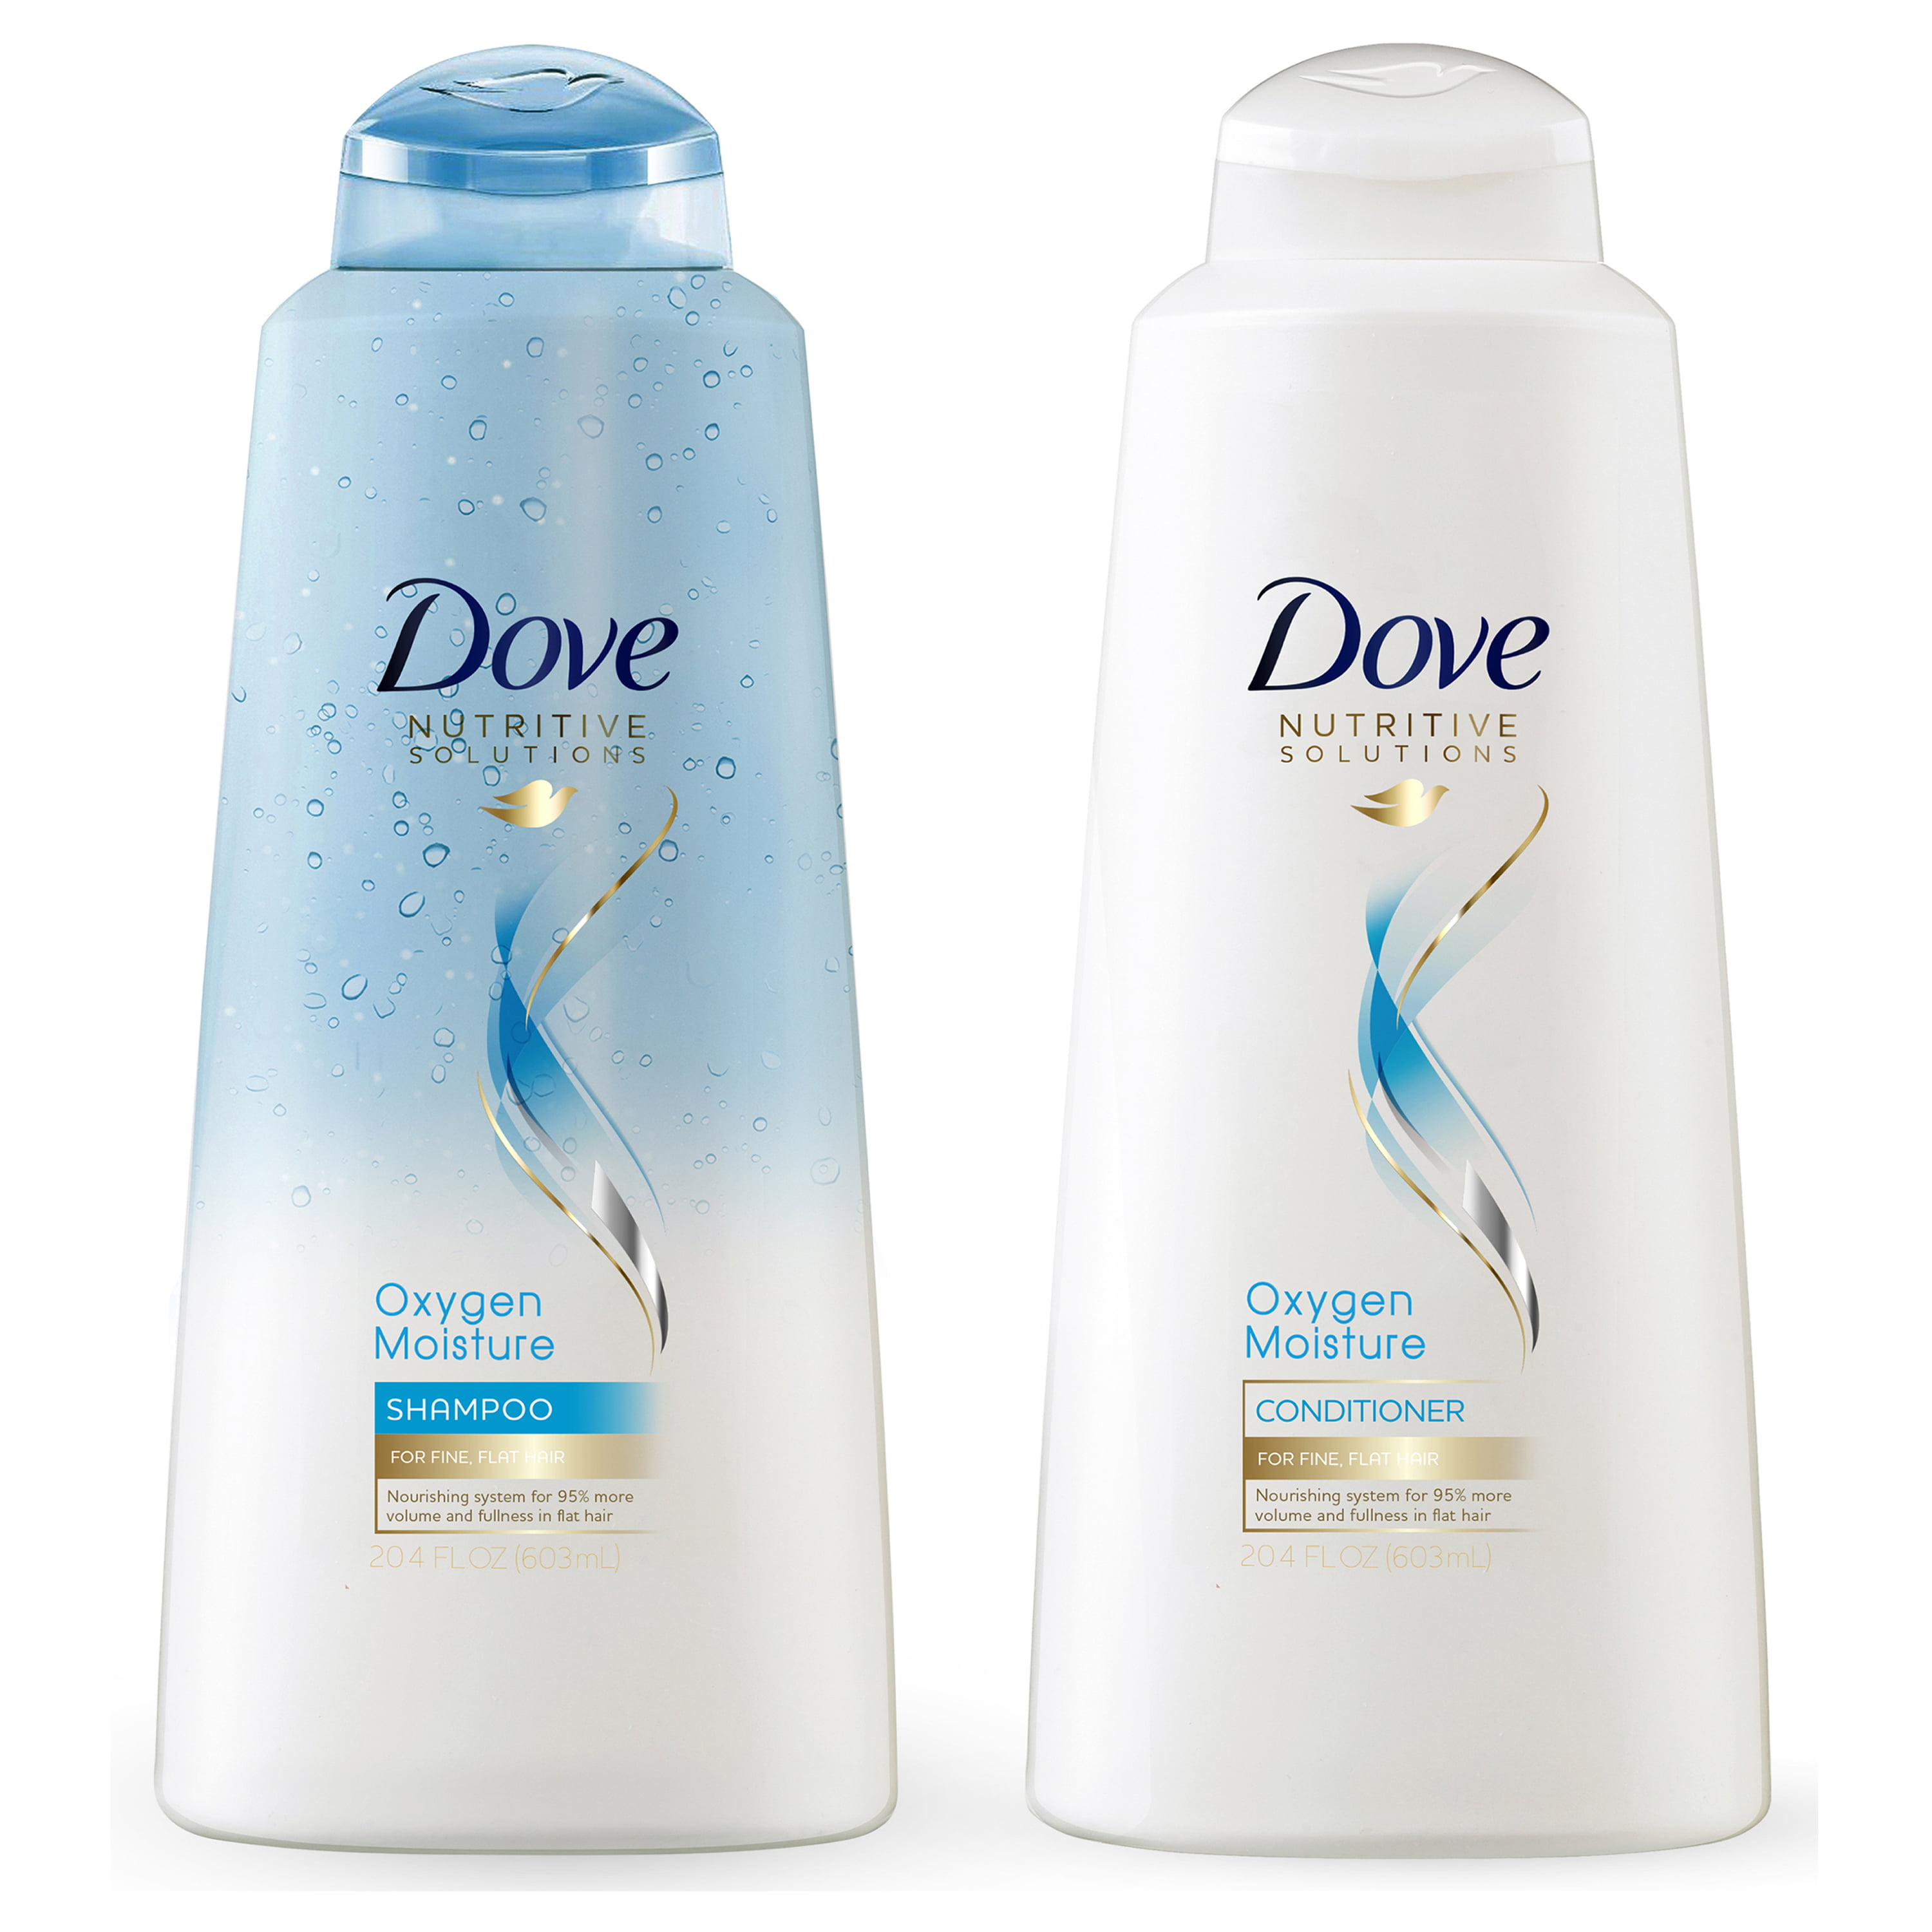 Dove Solutions Shampoo Oxygen 20.4 oz -